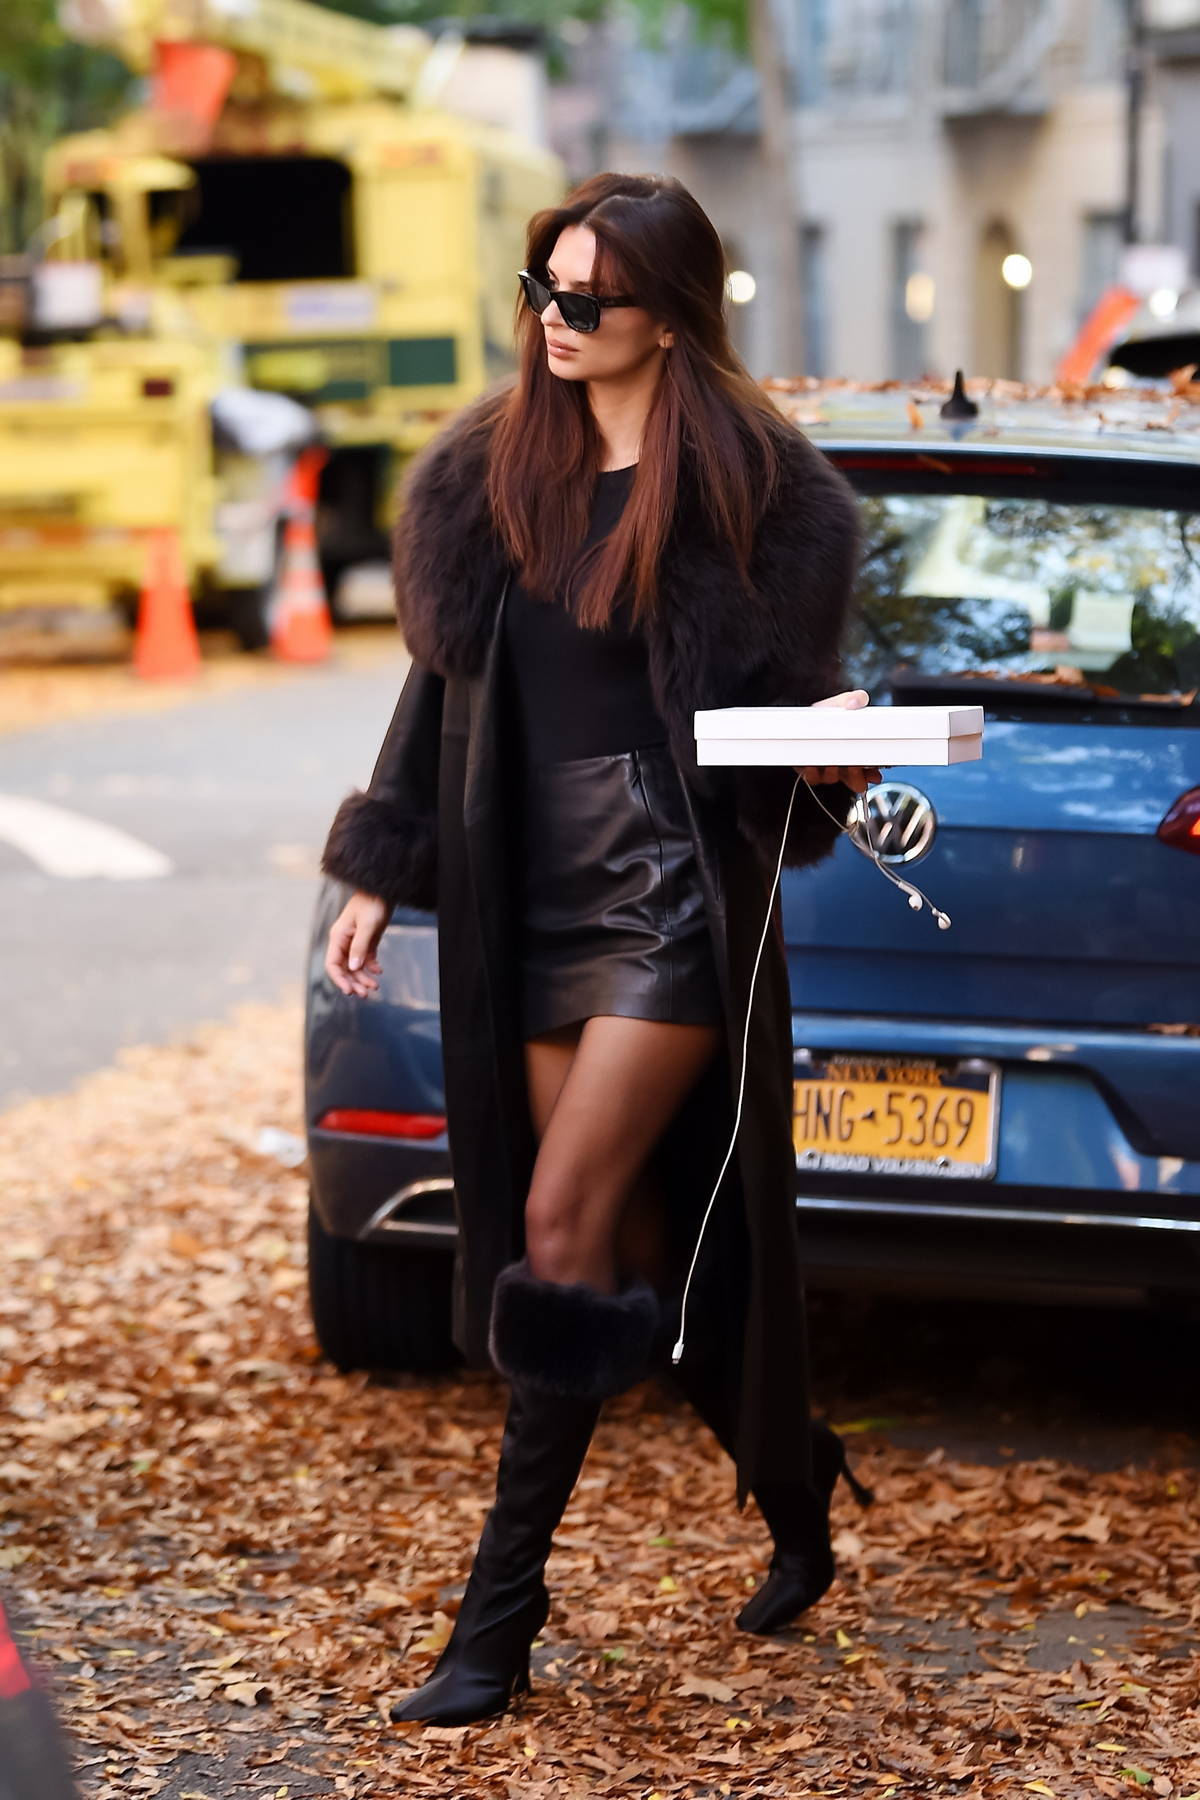 Emily Ratajkowski hits the streets of New York in matching black